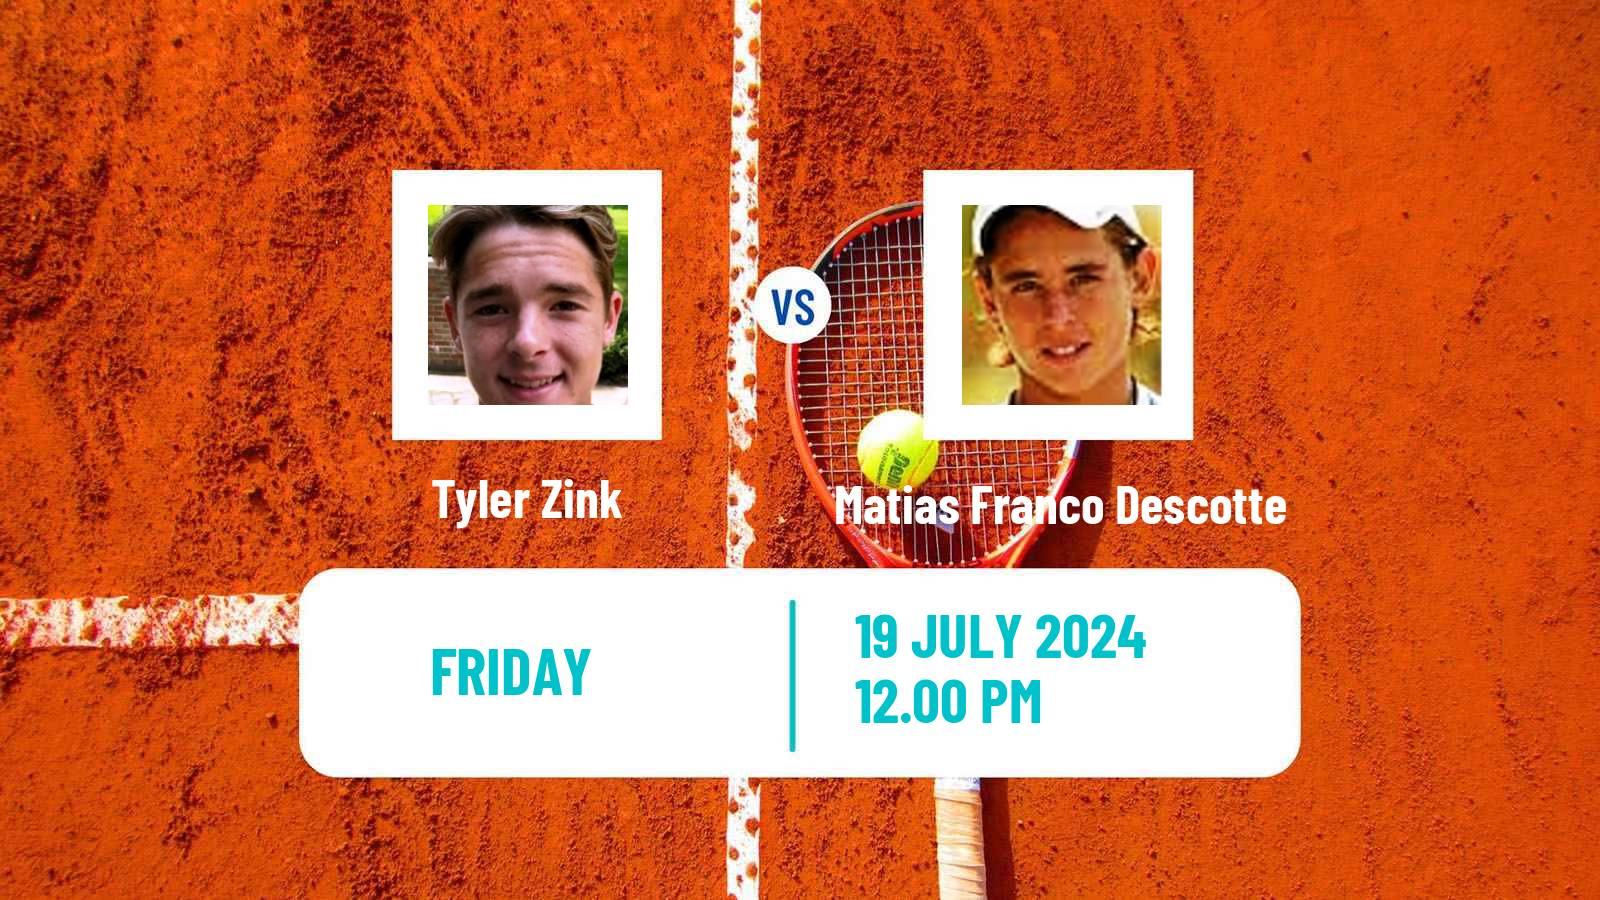 Tennis ITF M15 Rochester Ny Men Tyler Zink - Matias Franco Descotte